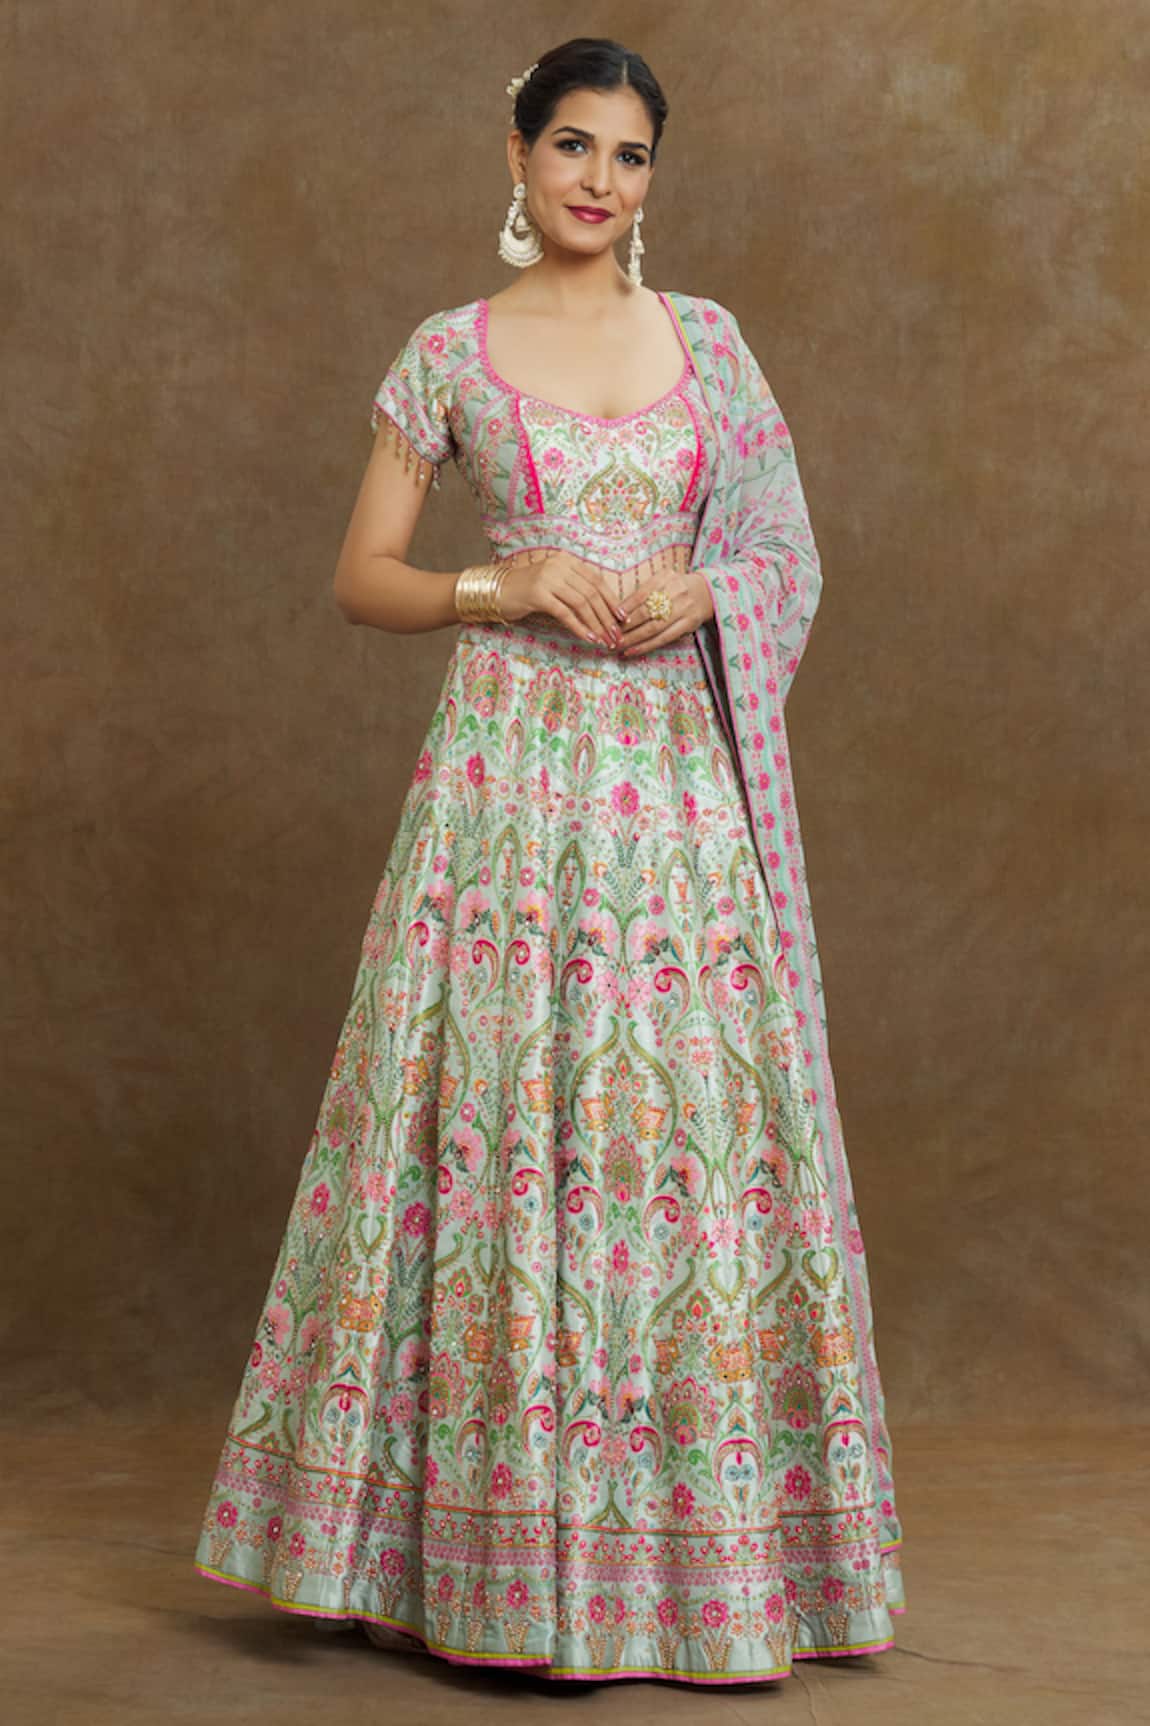 Samyukta Singhania Floral Garden Embroidered Bridal Lehenga Set